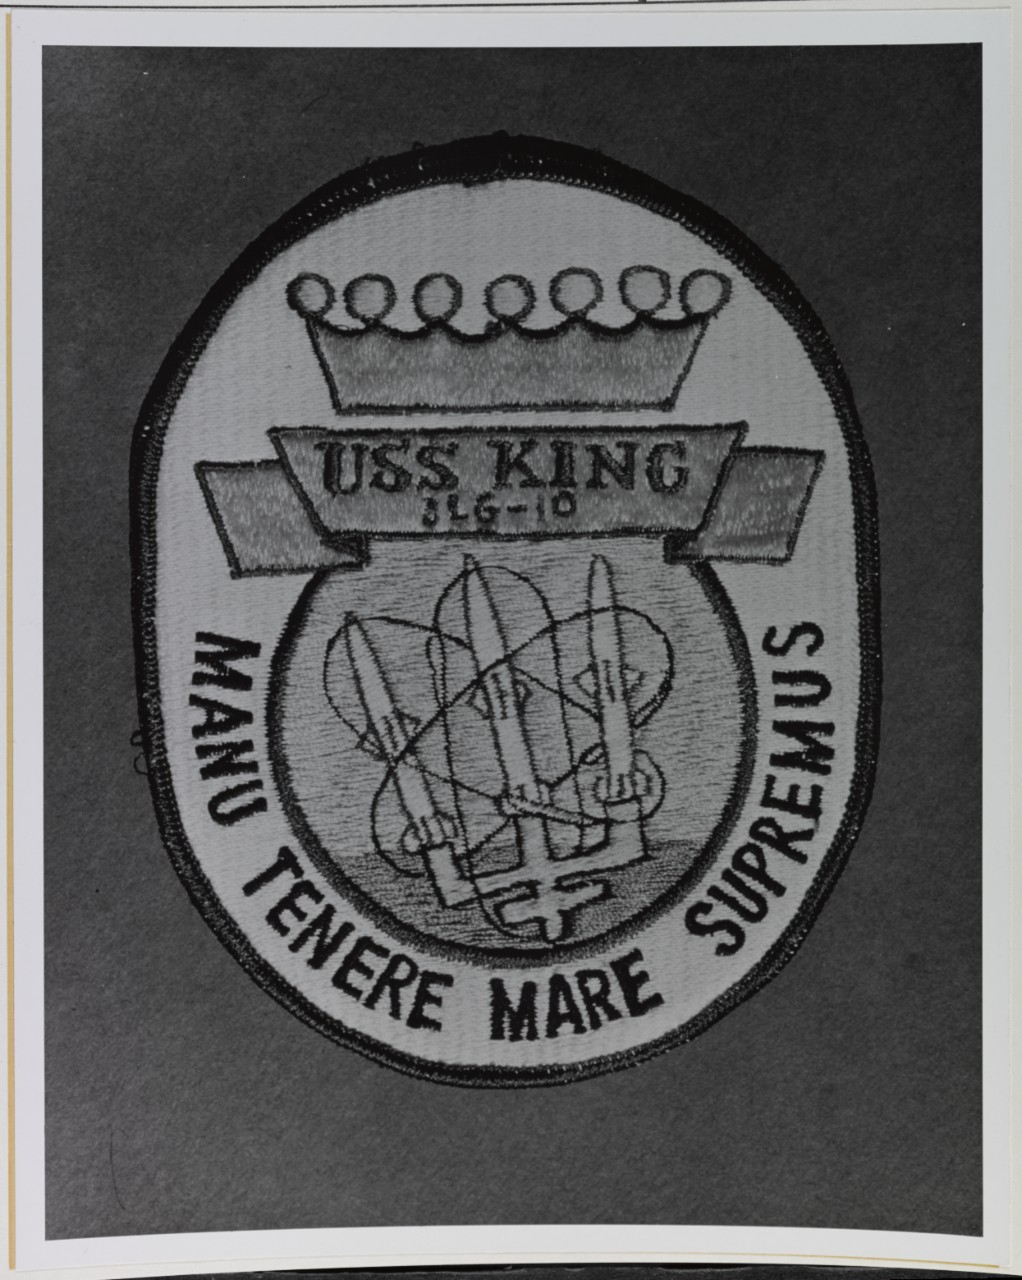 Insignia:  USS KING (DLG-10)